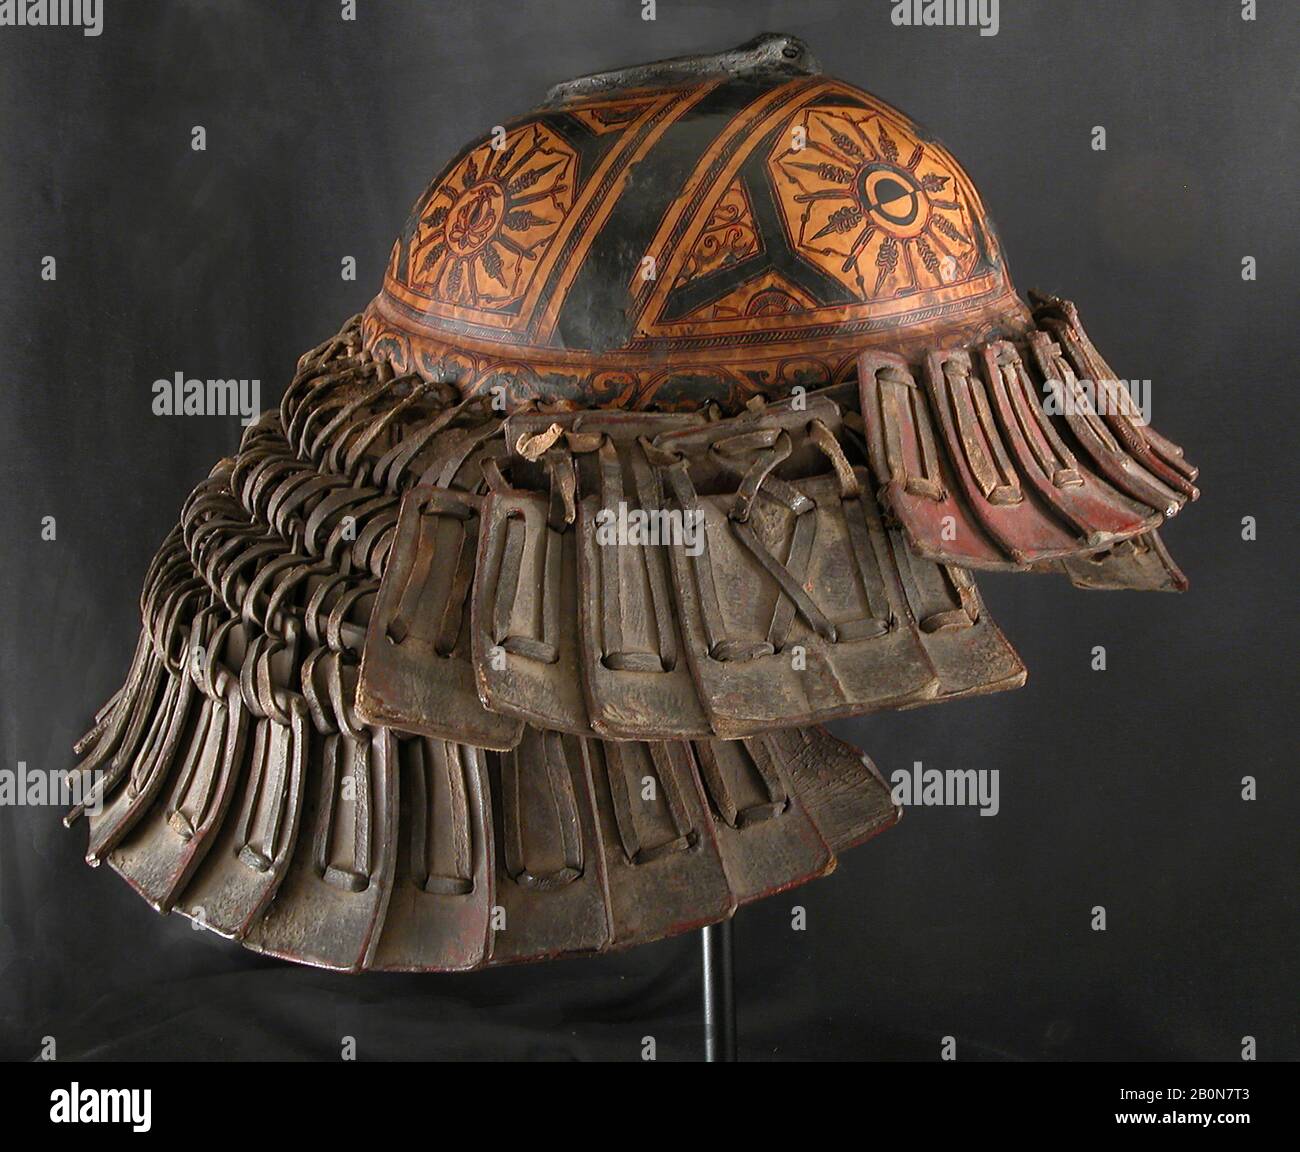 Helmet, Nuosu people, Yi nationality, Southwest China, possibly 17th–18th century, Nuosu people, Yi nationality, Southwest China, Leather, lacquer, H. 10 in. (25.4 cm); W. 12 in. (30.5 cm); D. 12 1/2 in. (31.8 cm), Helmets Stock Photo